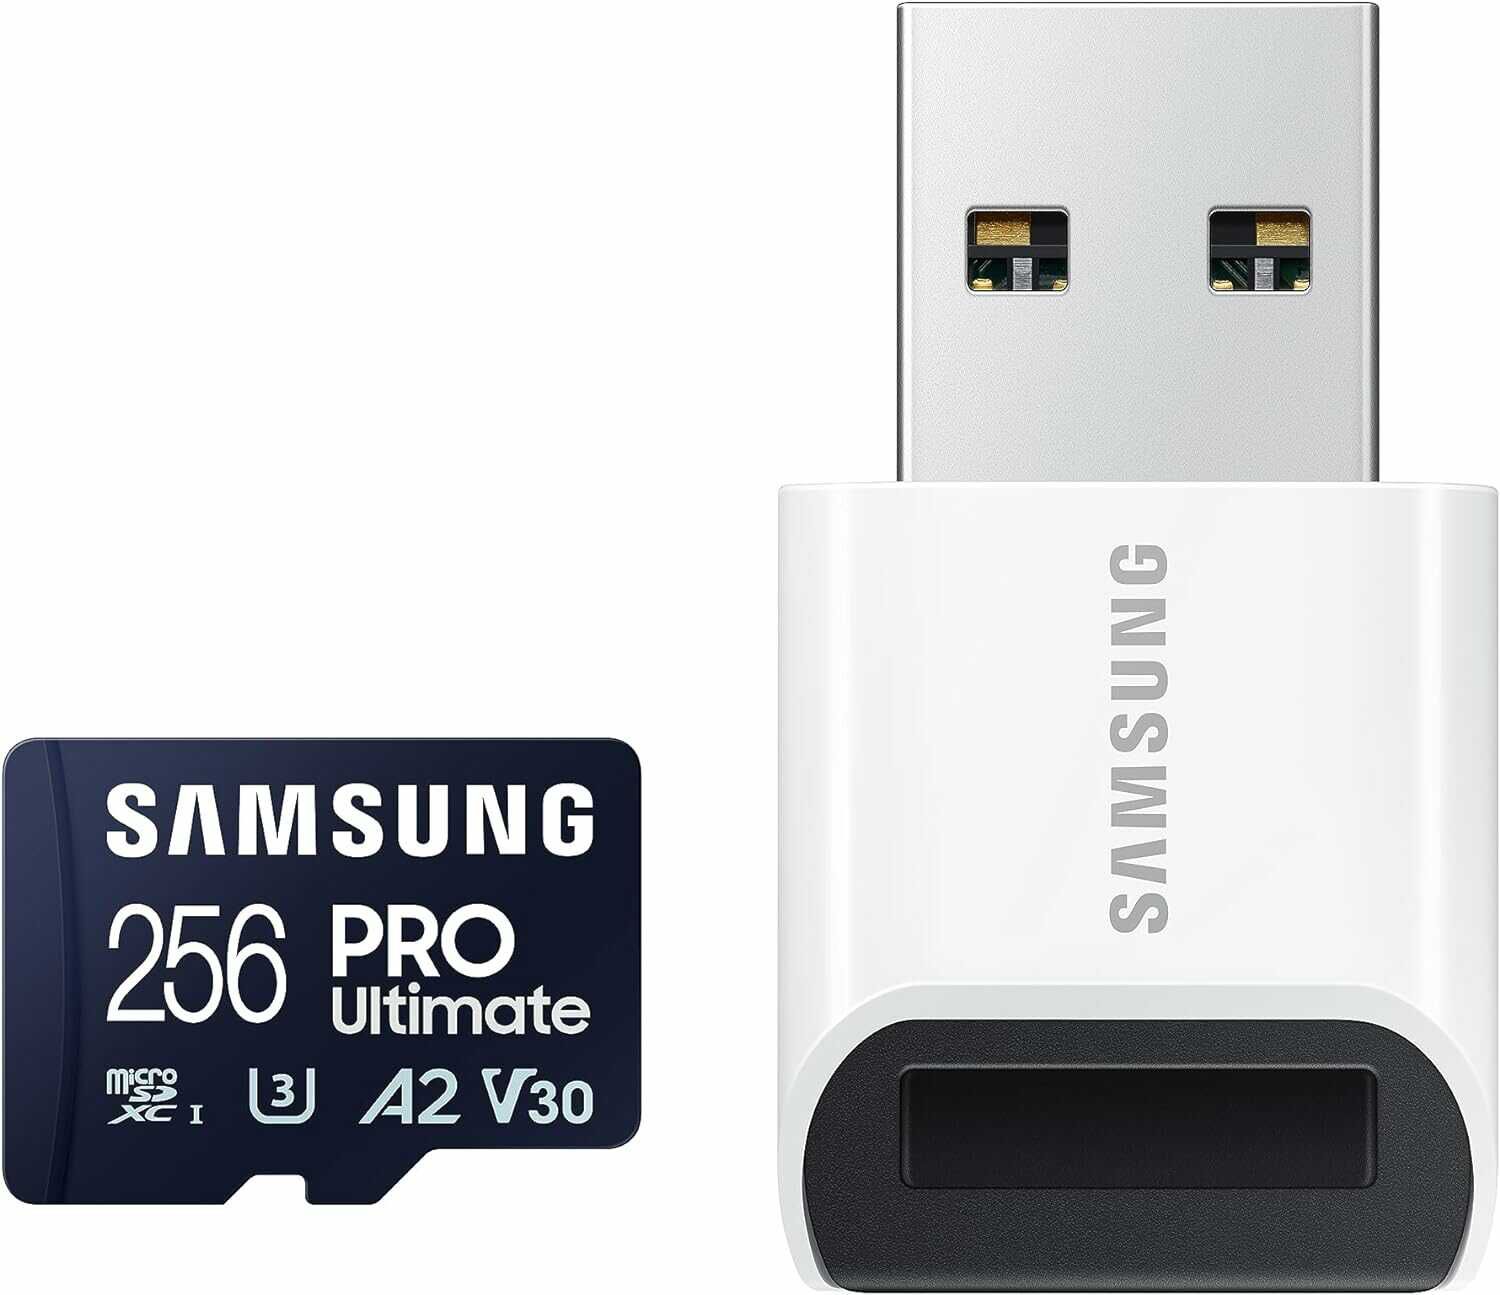 Samsung PRO Ultimate 256 GB Speicherkarte inkl. USB Kartenleser für 28,90€ statt 41,90€